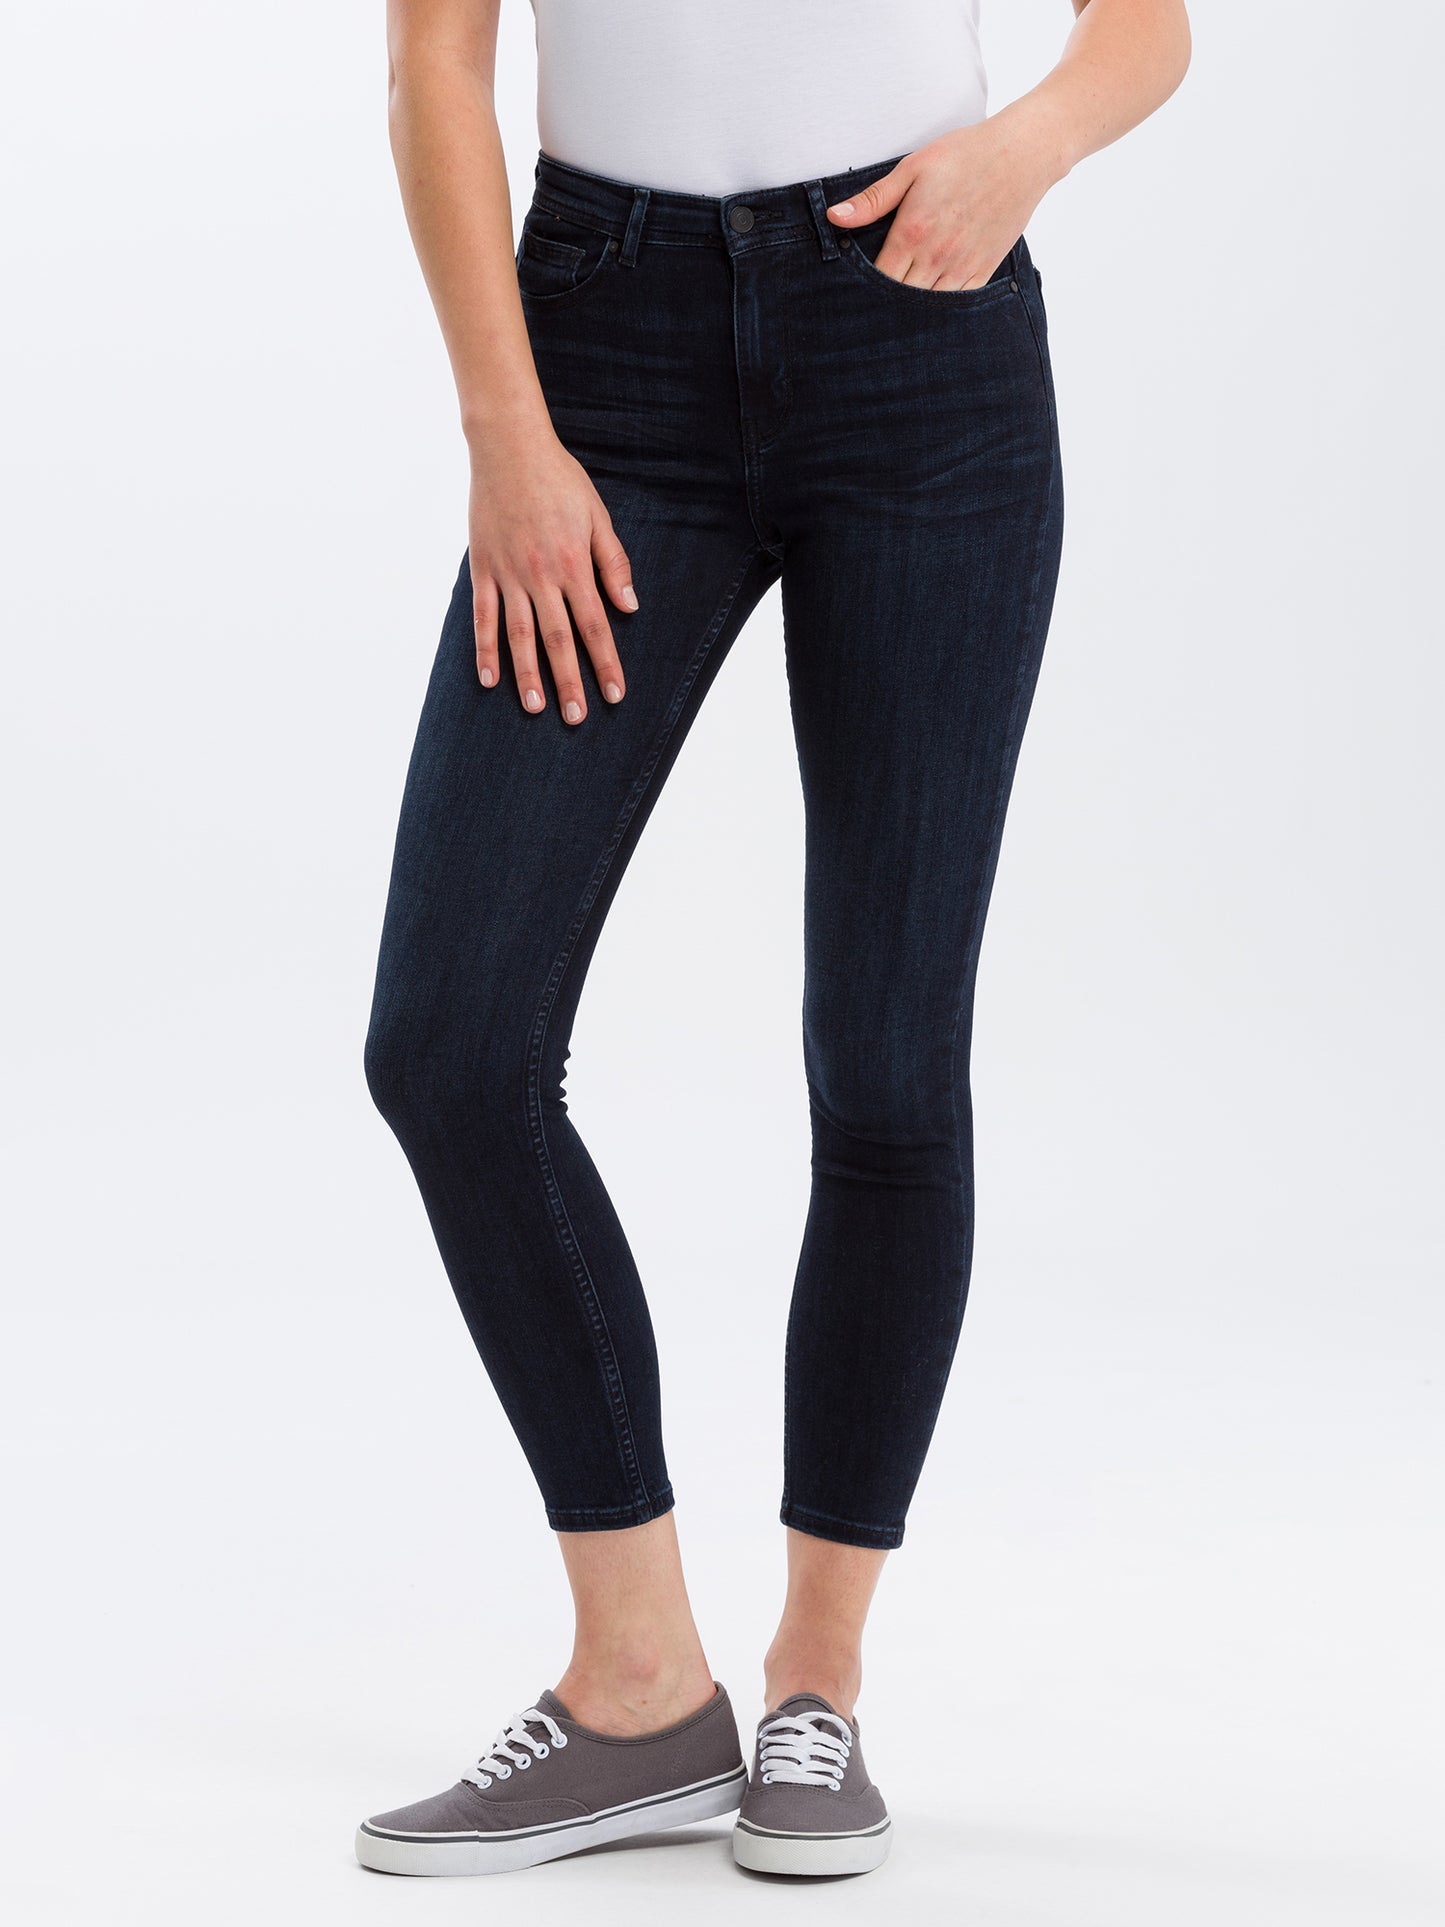 Judy Damen Jeans Super Skinny Fit High Waist Ankle Lenght schwarzblau